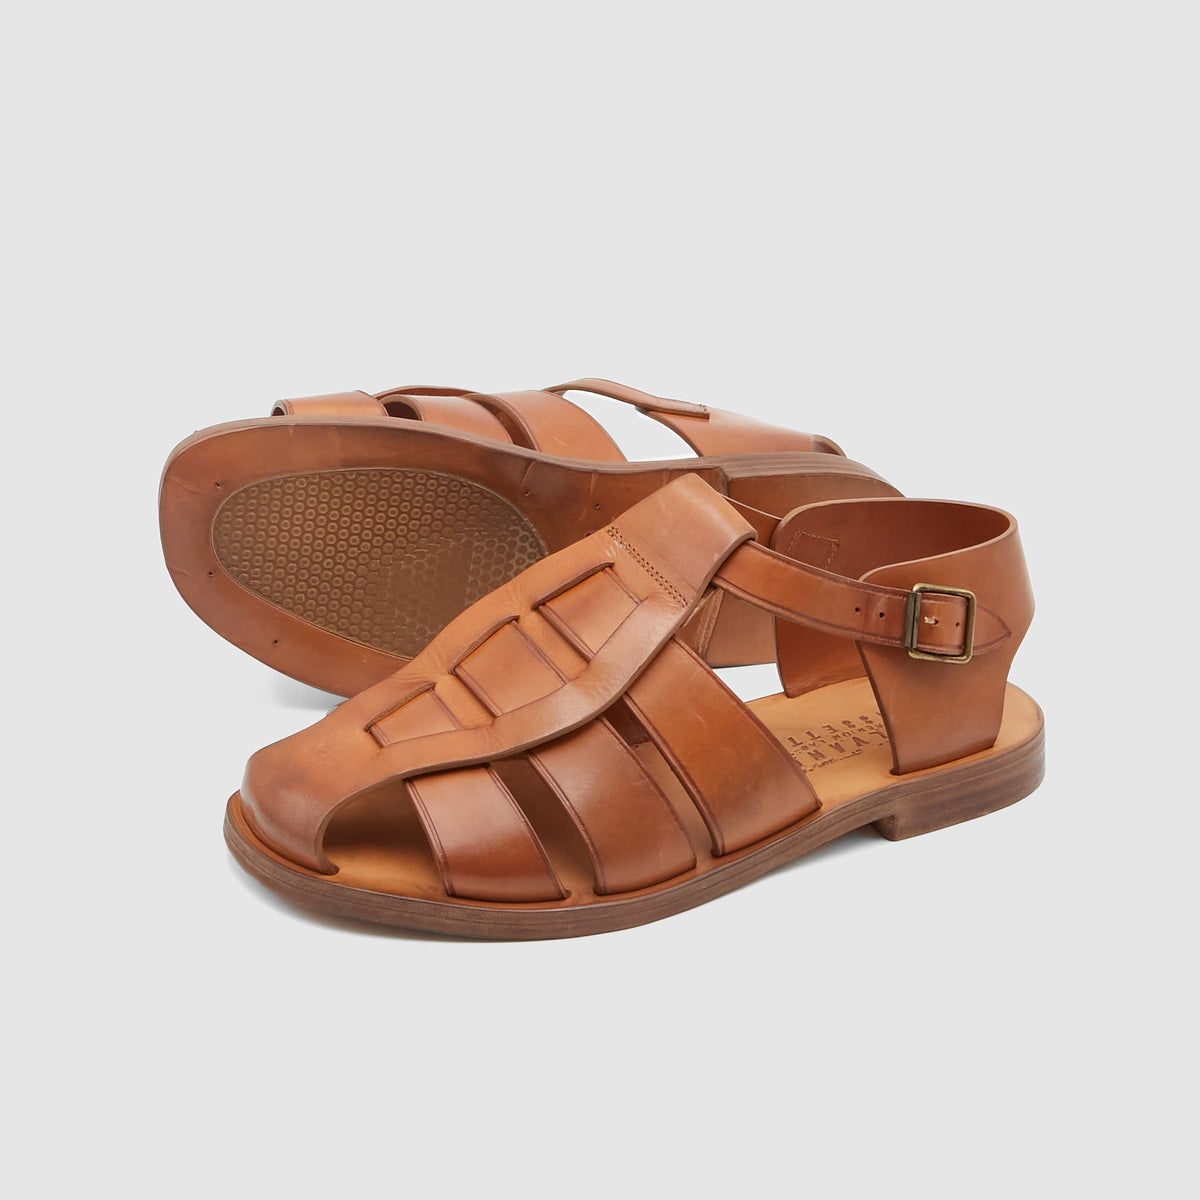 Silvano Sassetti  Leather Sandals